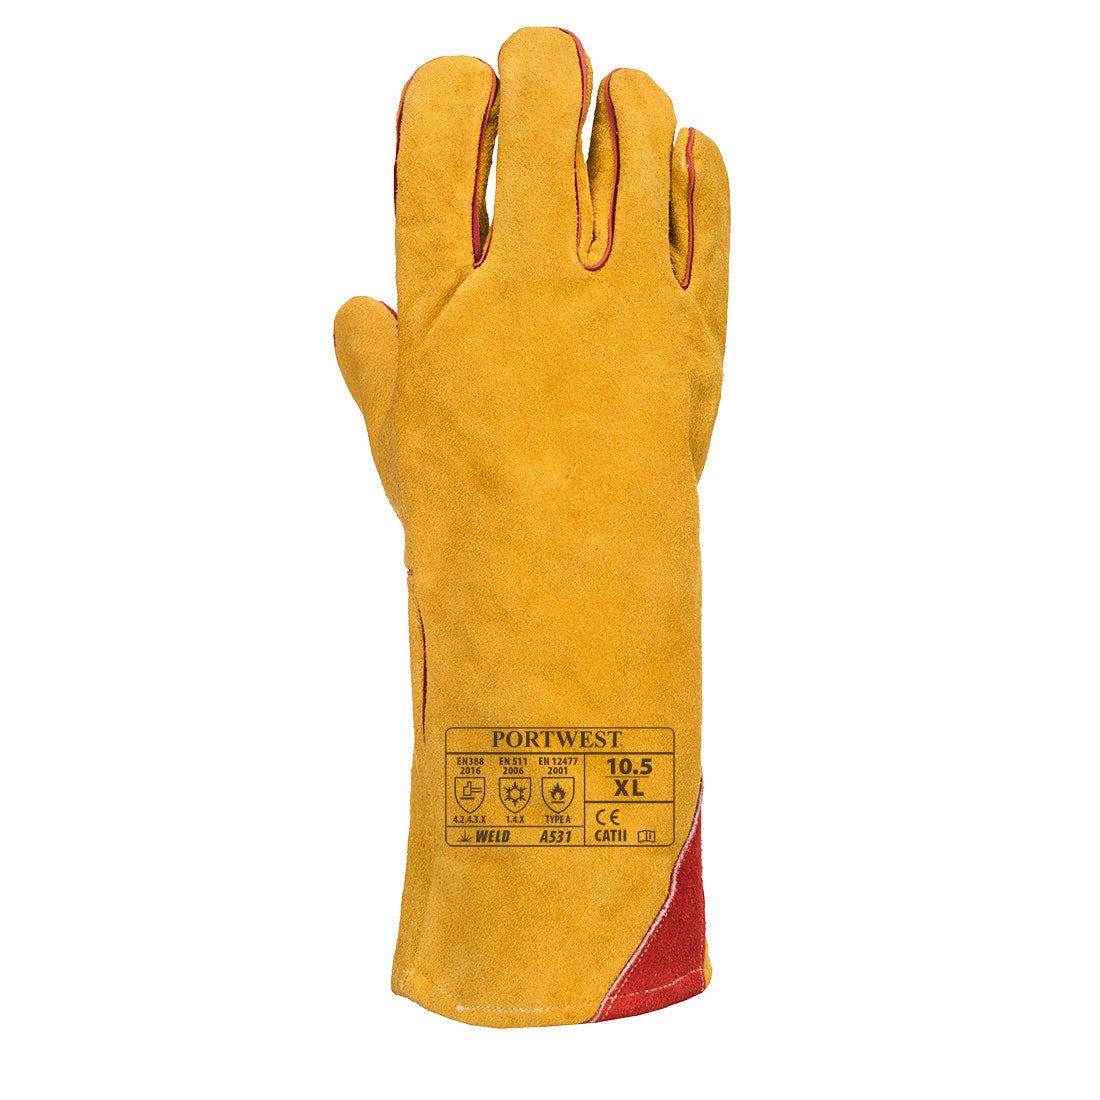 Portwest A531 Reinforced Winter Welding Gauntlet Gloves Size 10